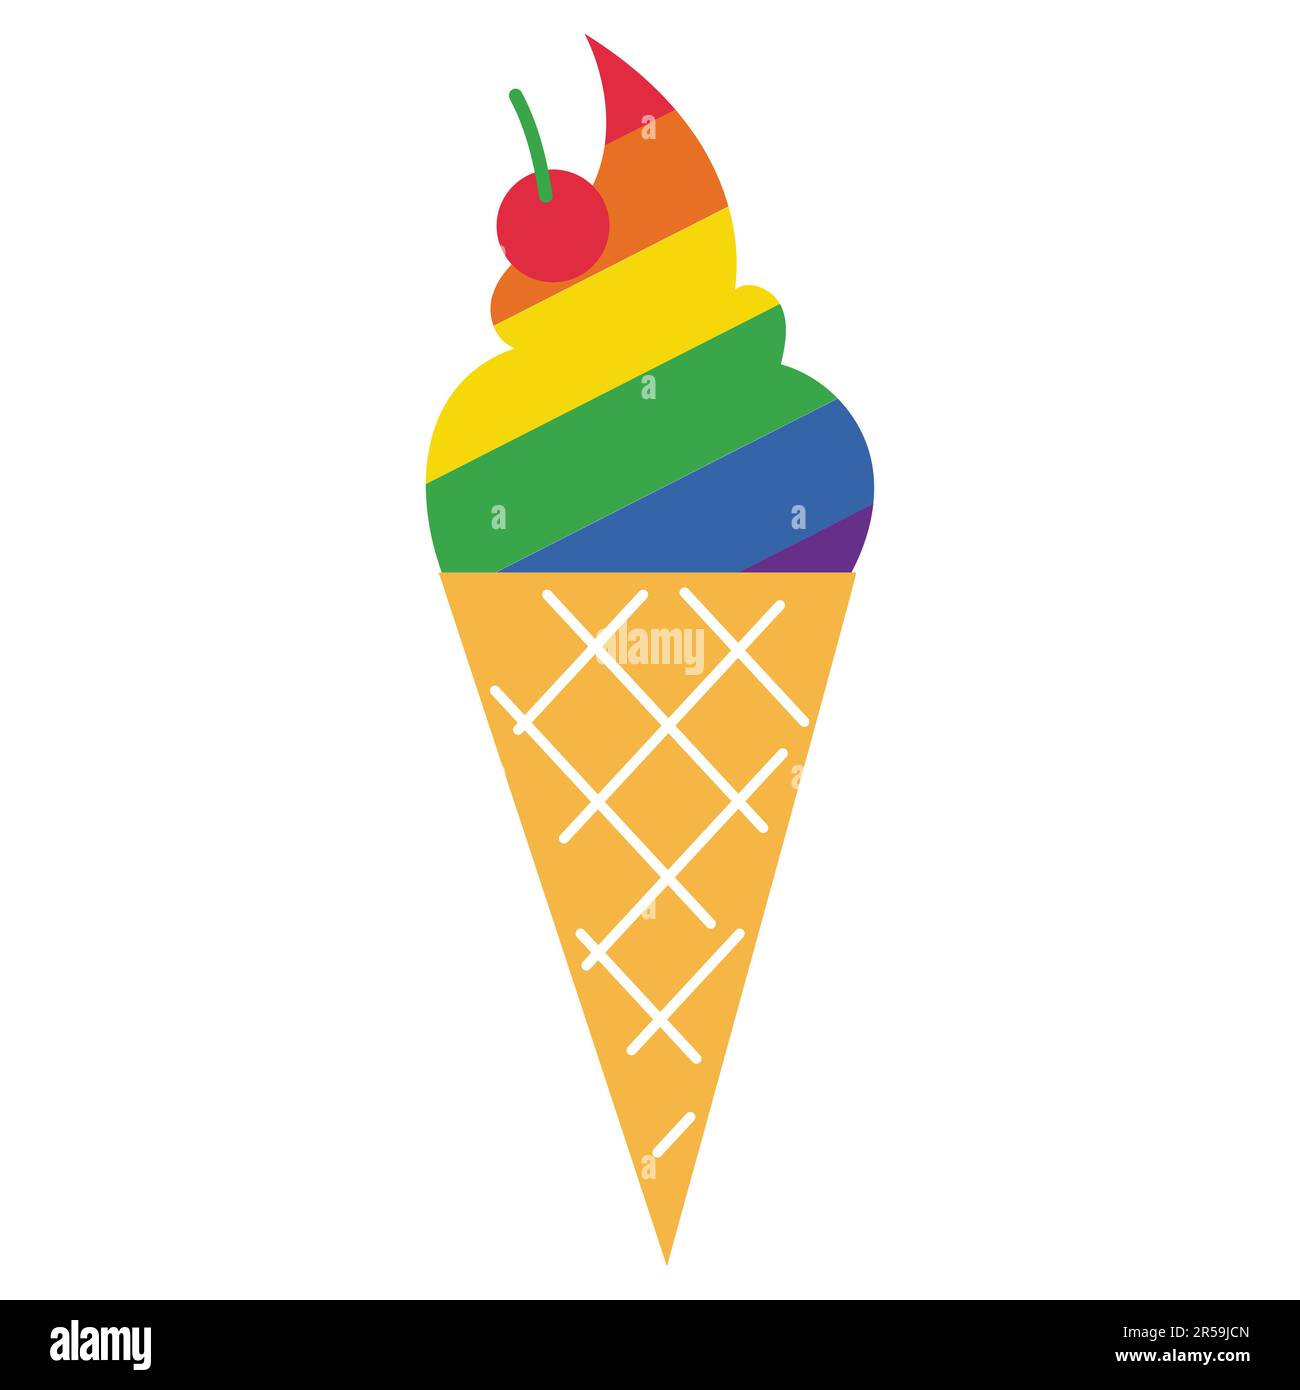 https://c8.alamy.com/comp/2R59JCN/lgbt-pride-ice-cream-icon-design-gay-pride-equality-rainbow-family-on-white-background-2R59JCN.jpg